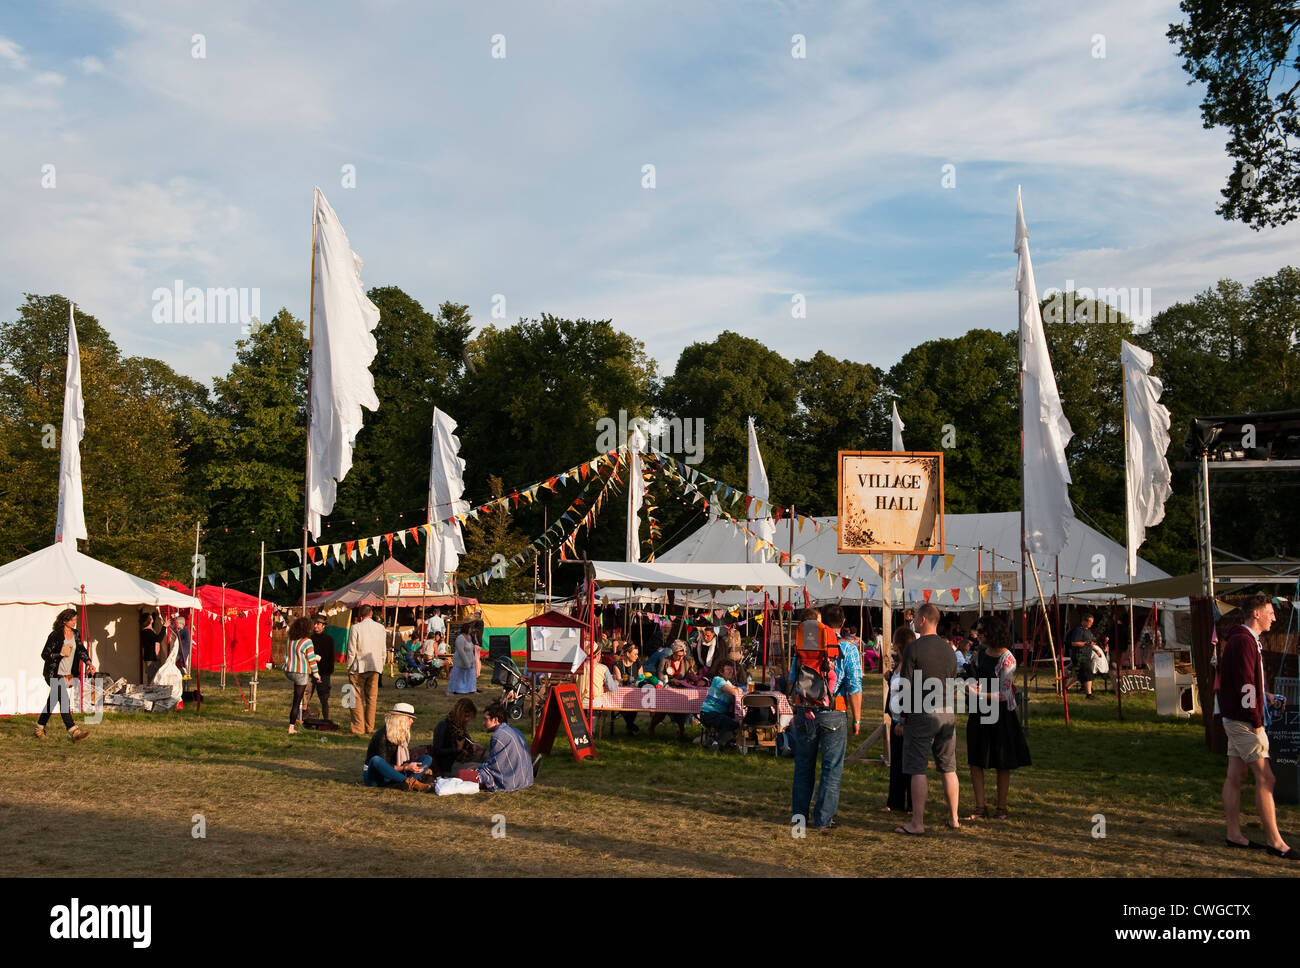 The Village Hall tent at the Wilderness music festival, Cornbury, Oxfordshire, UK Stock Photo